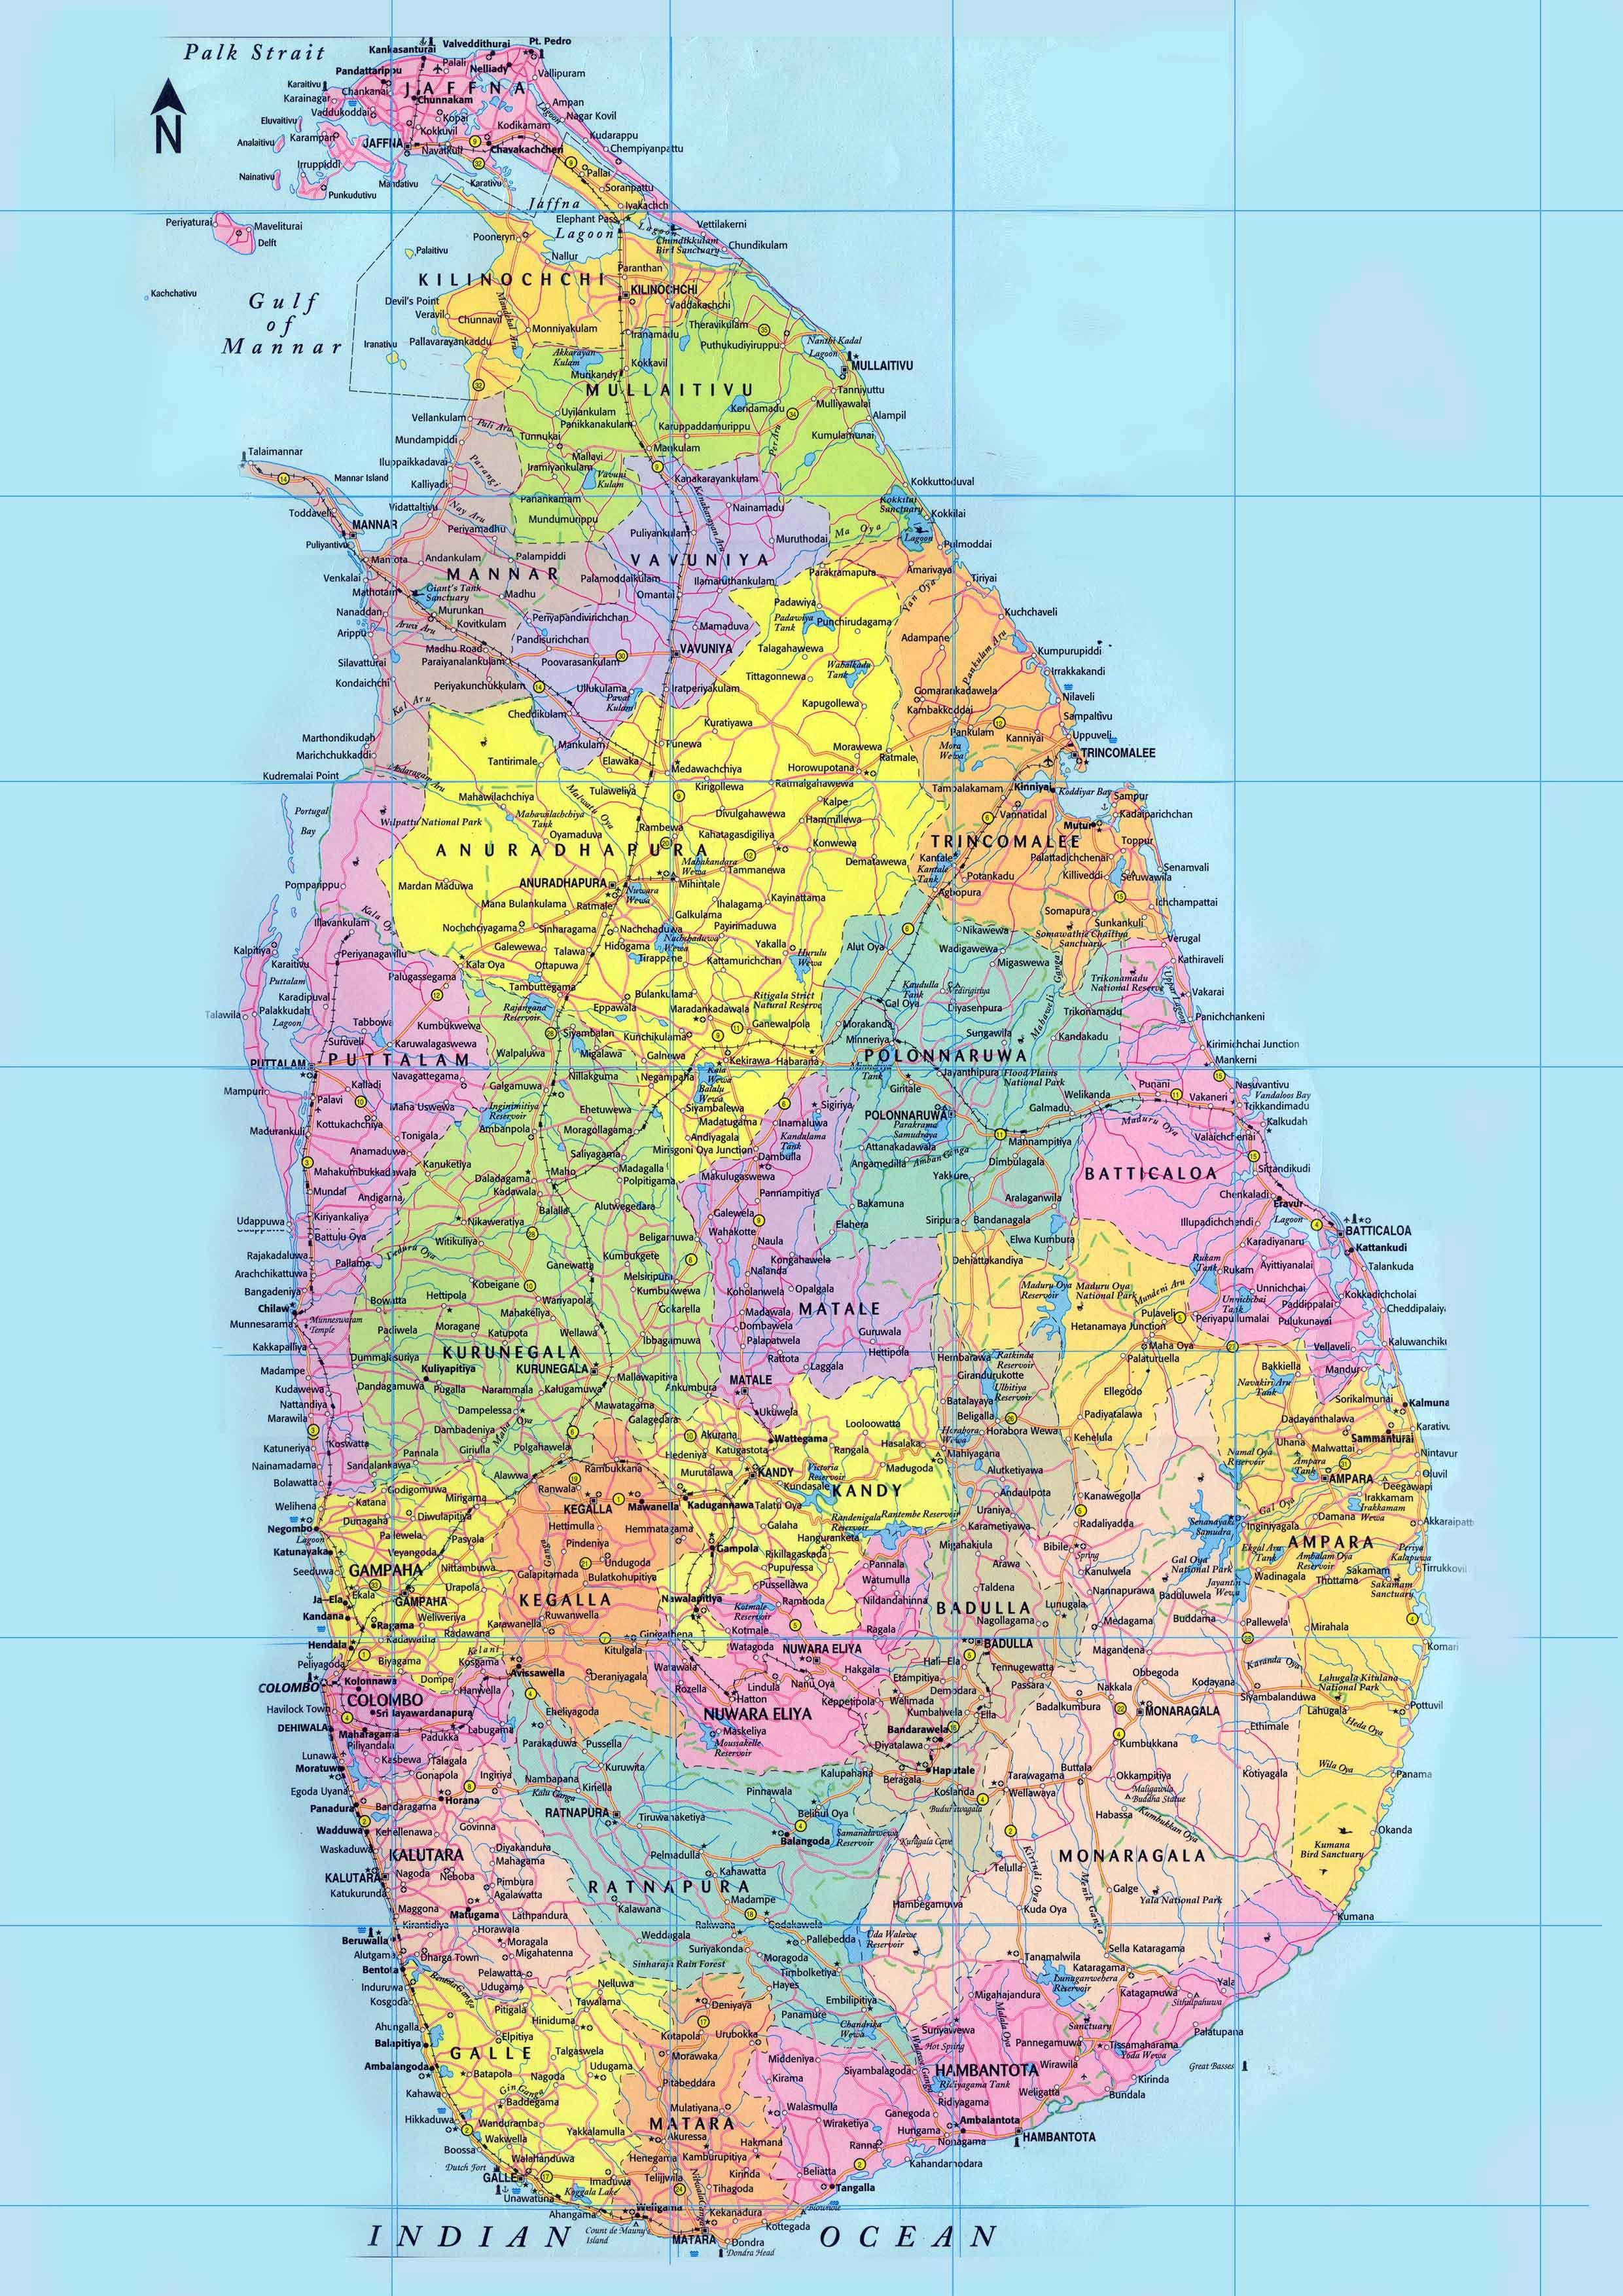 maps of sri lanka